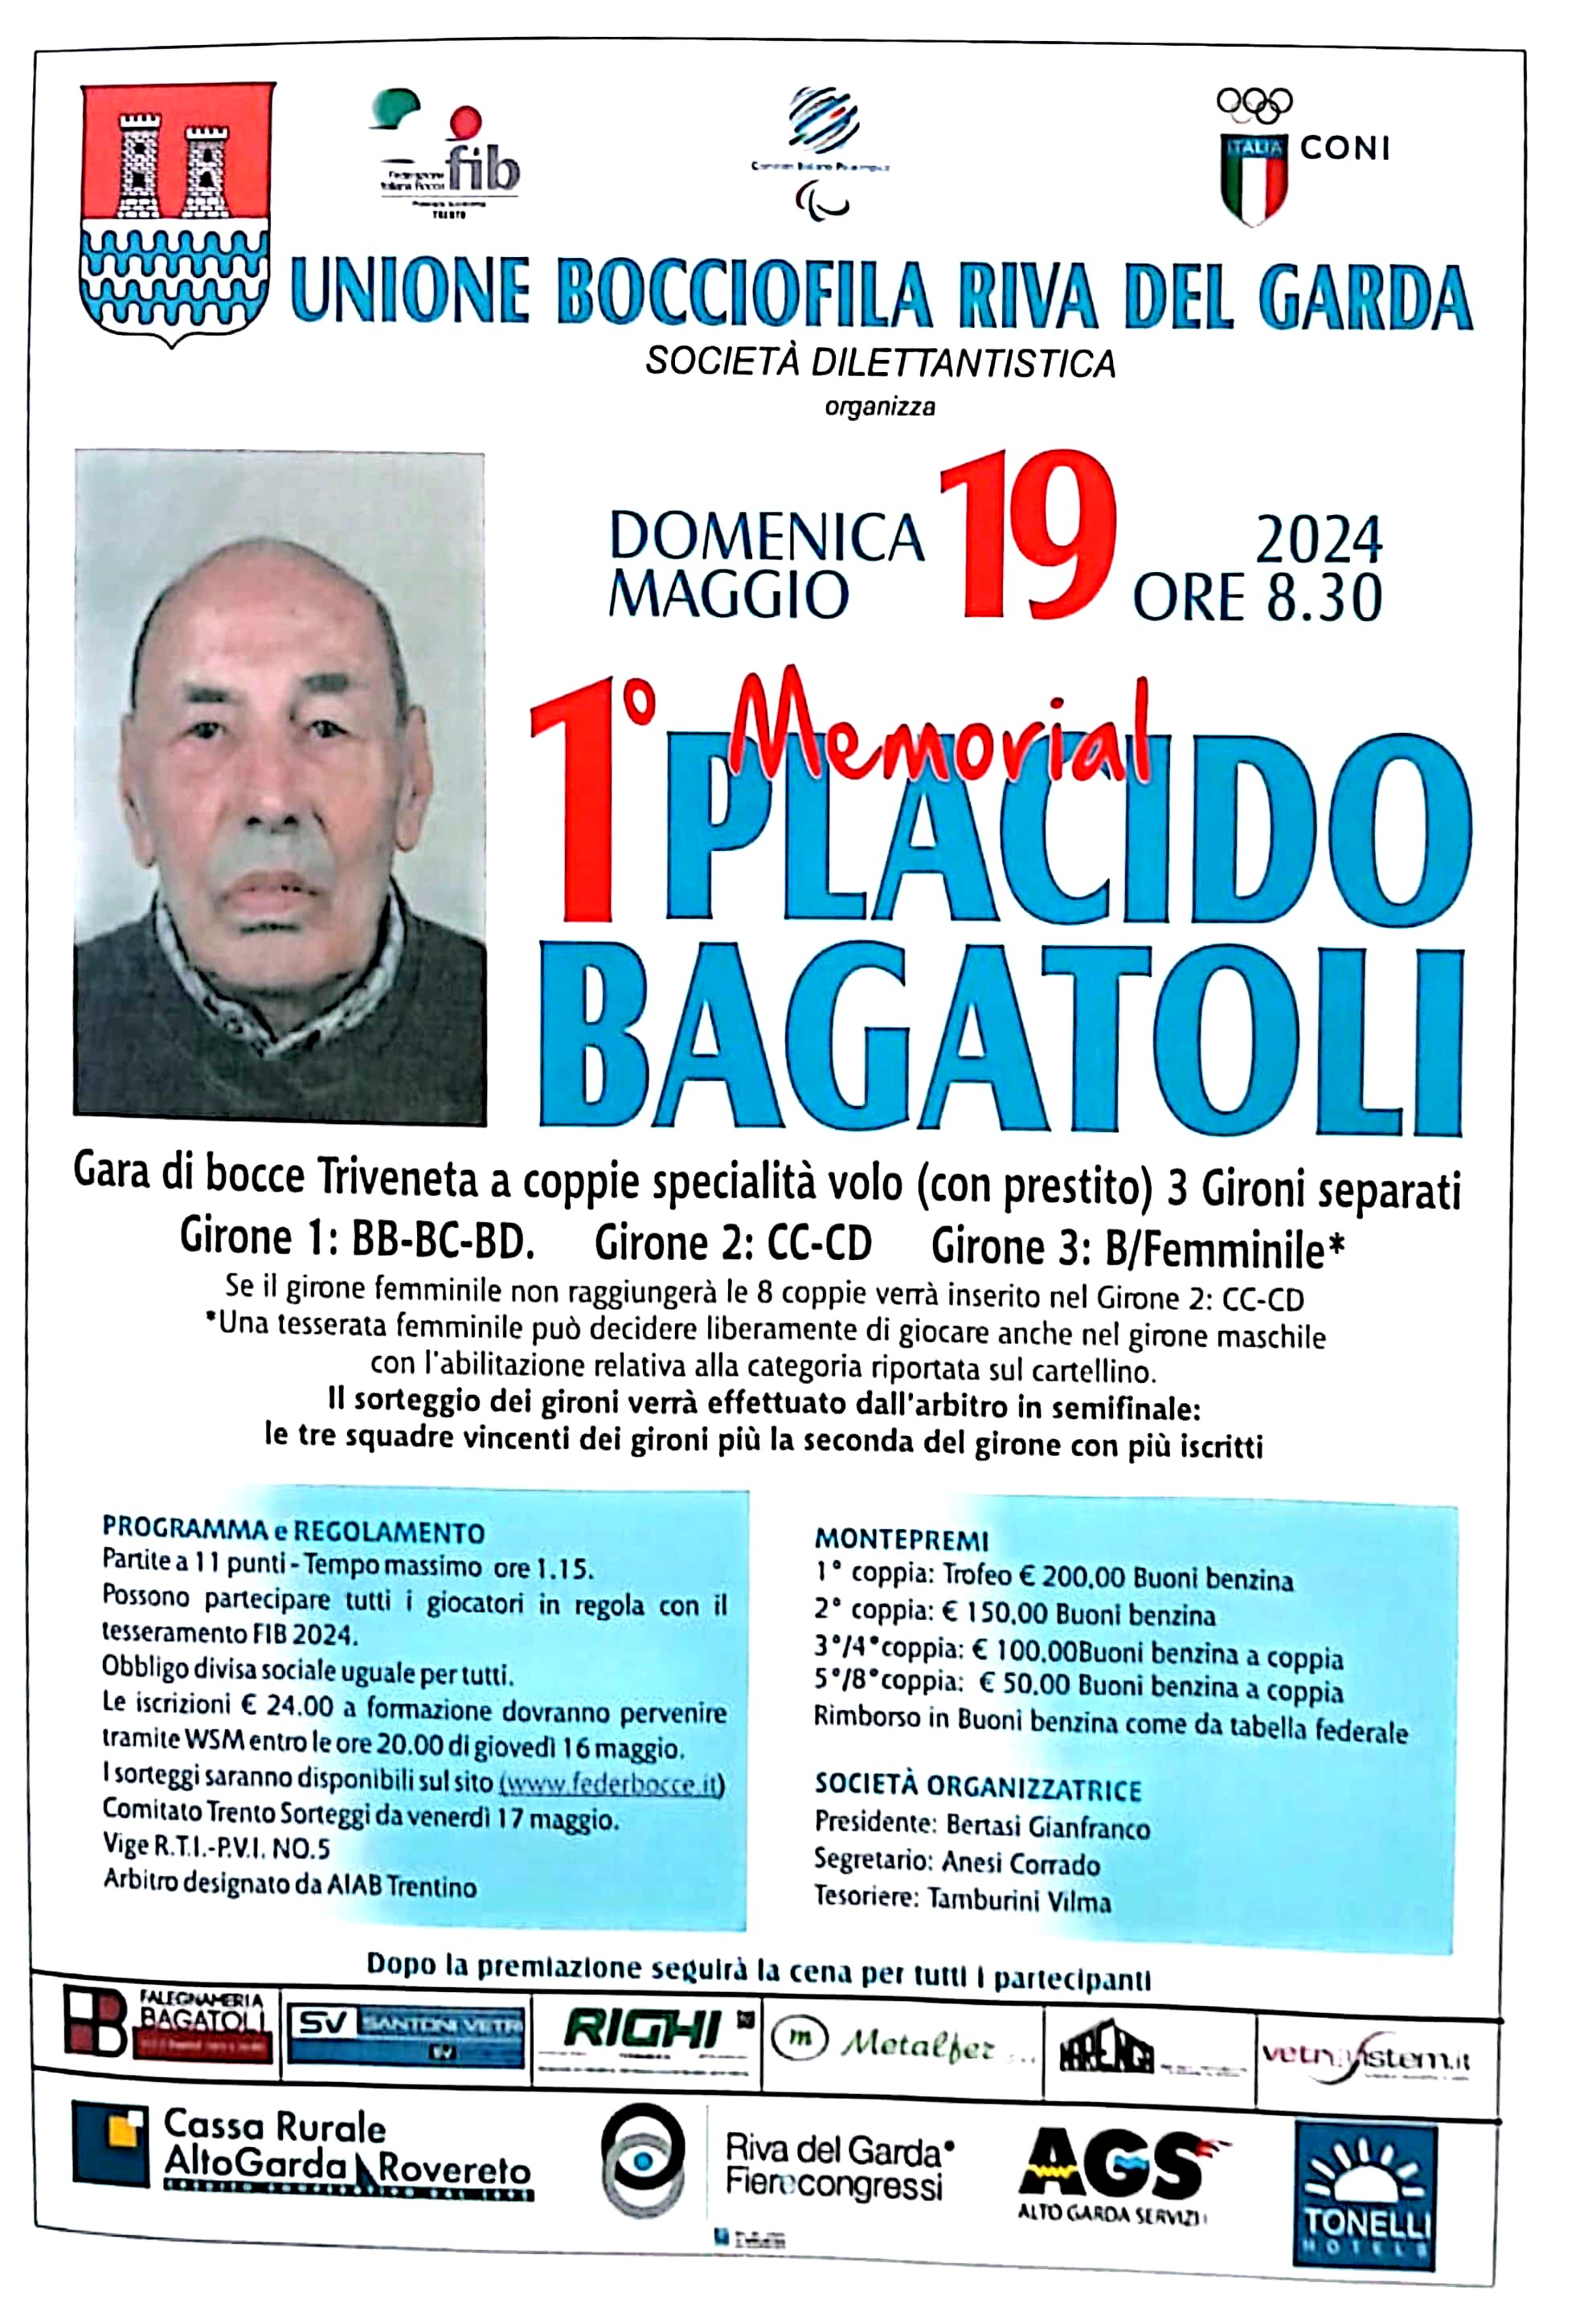 202405 19 1 Memorial Angelo Bagatoli UB Riva MANIFESTO